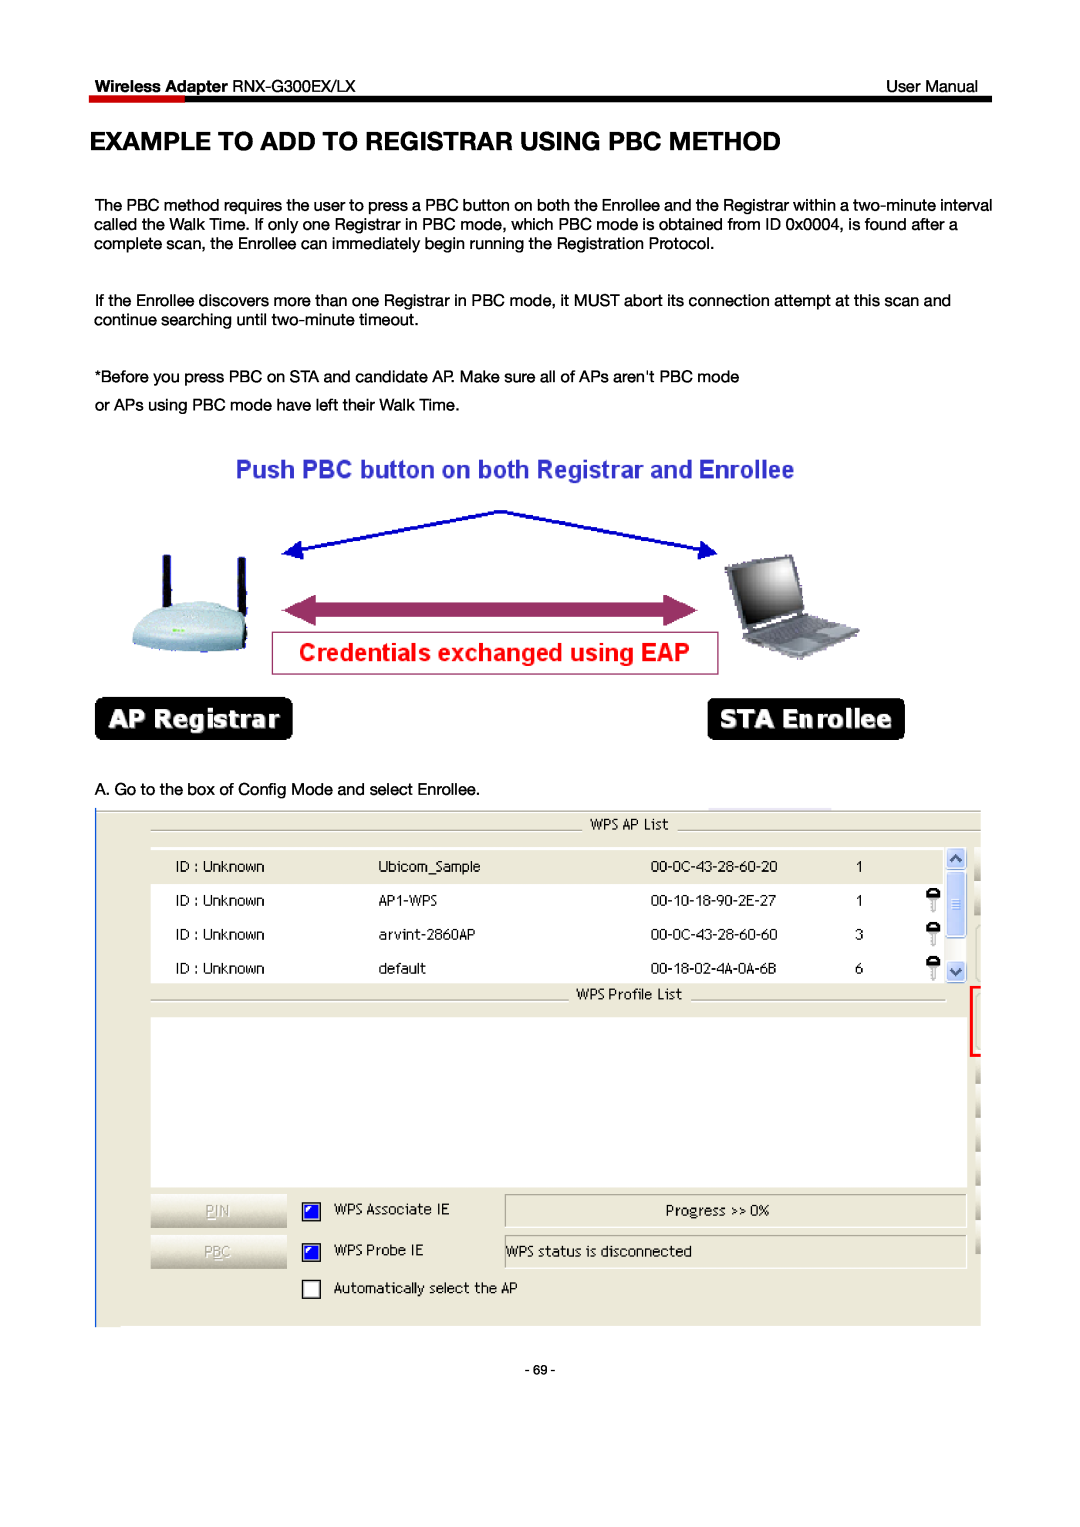 Rosewill RNX-G300EXLX user manual Example To Add To Registrar Using Pbc Method, Wireless Adapter RNX-G300EX/LX 